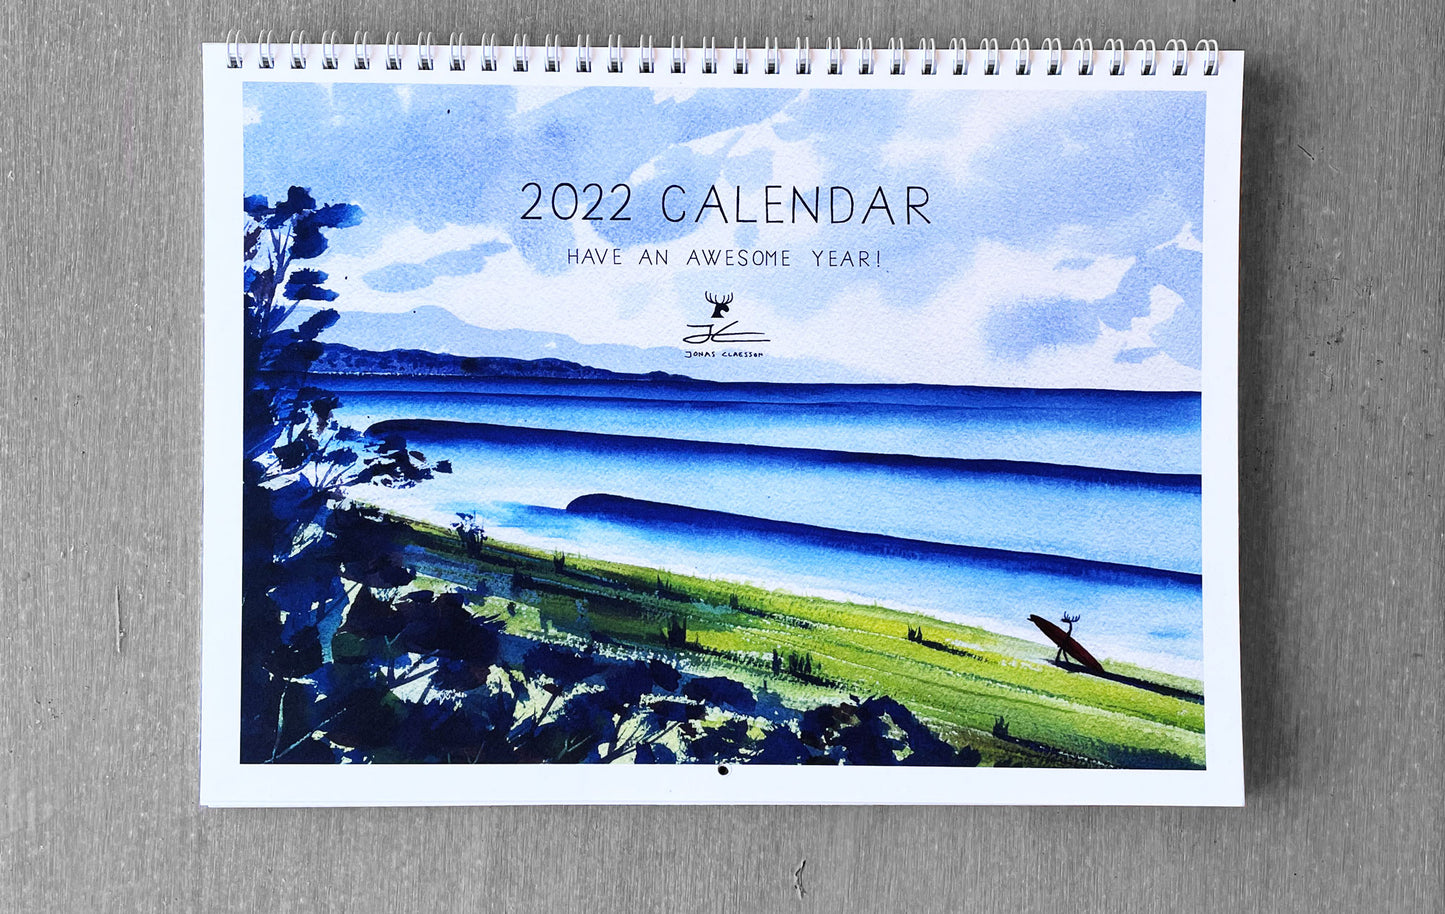 2022 Wall Calendar is here!